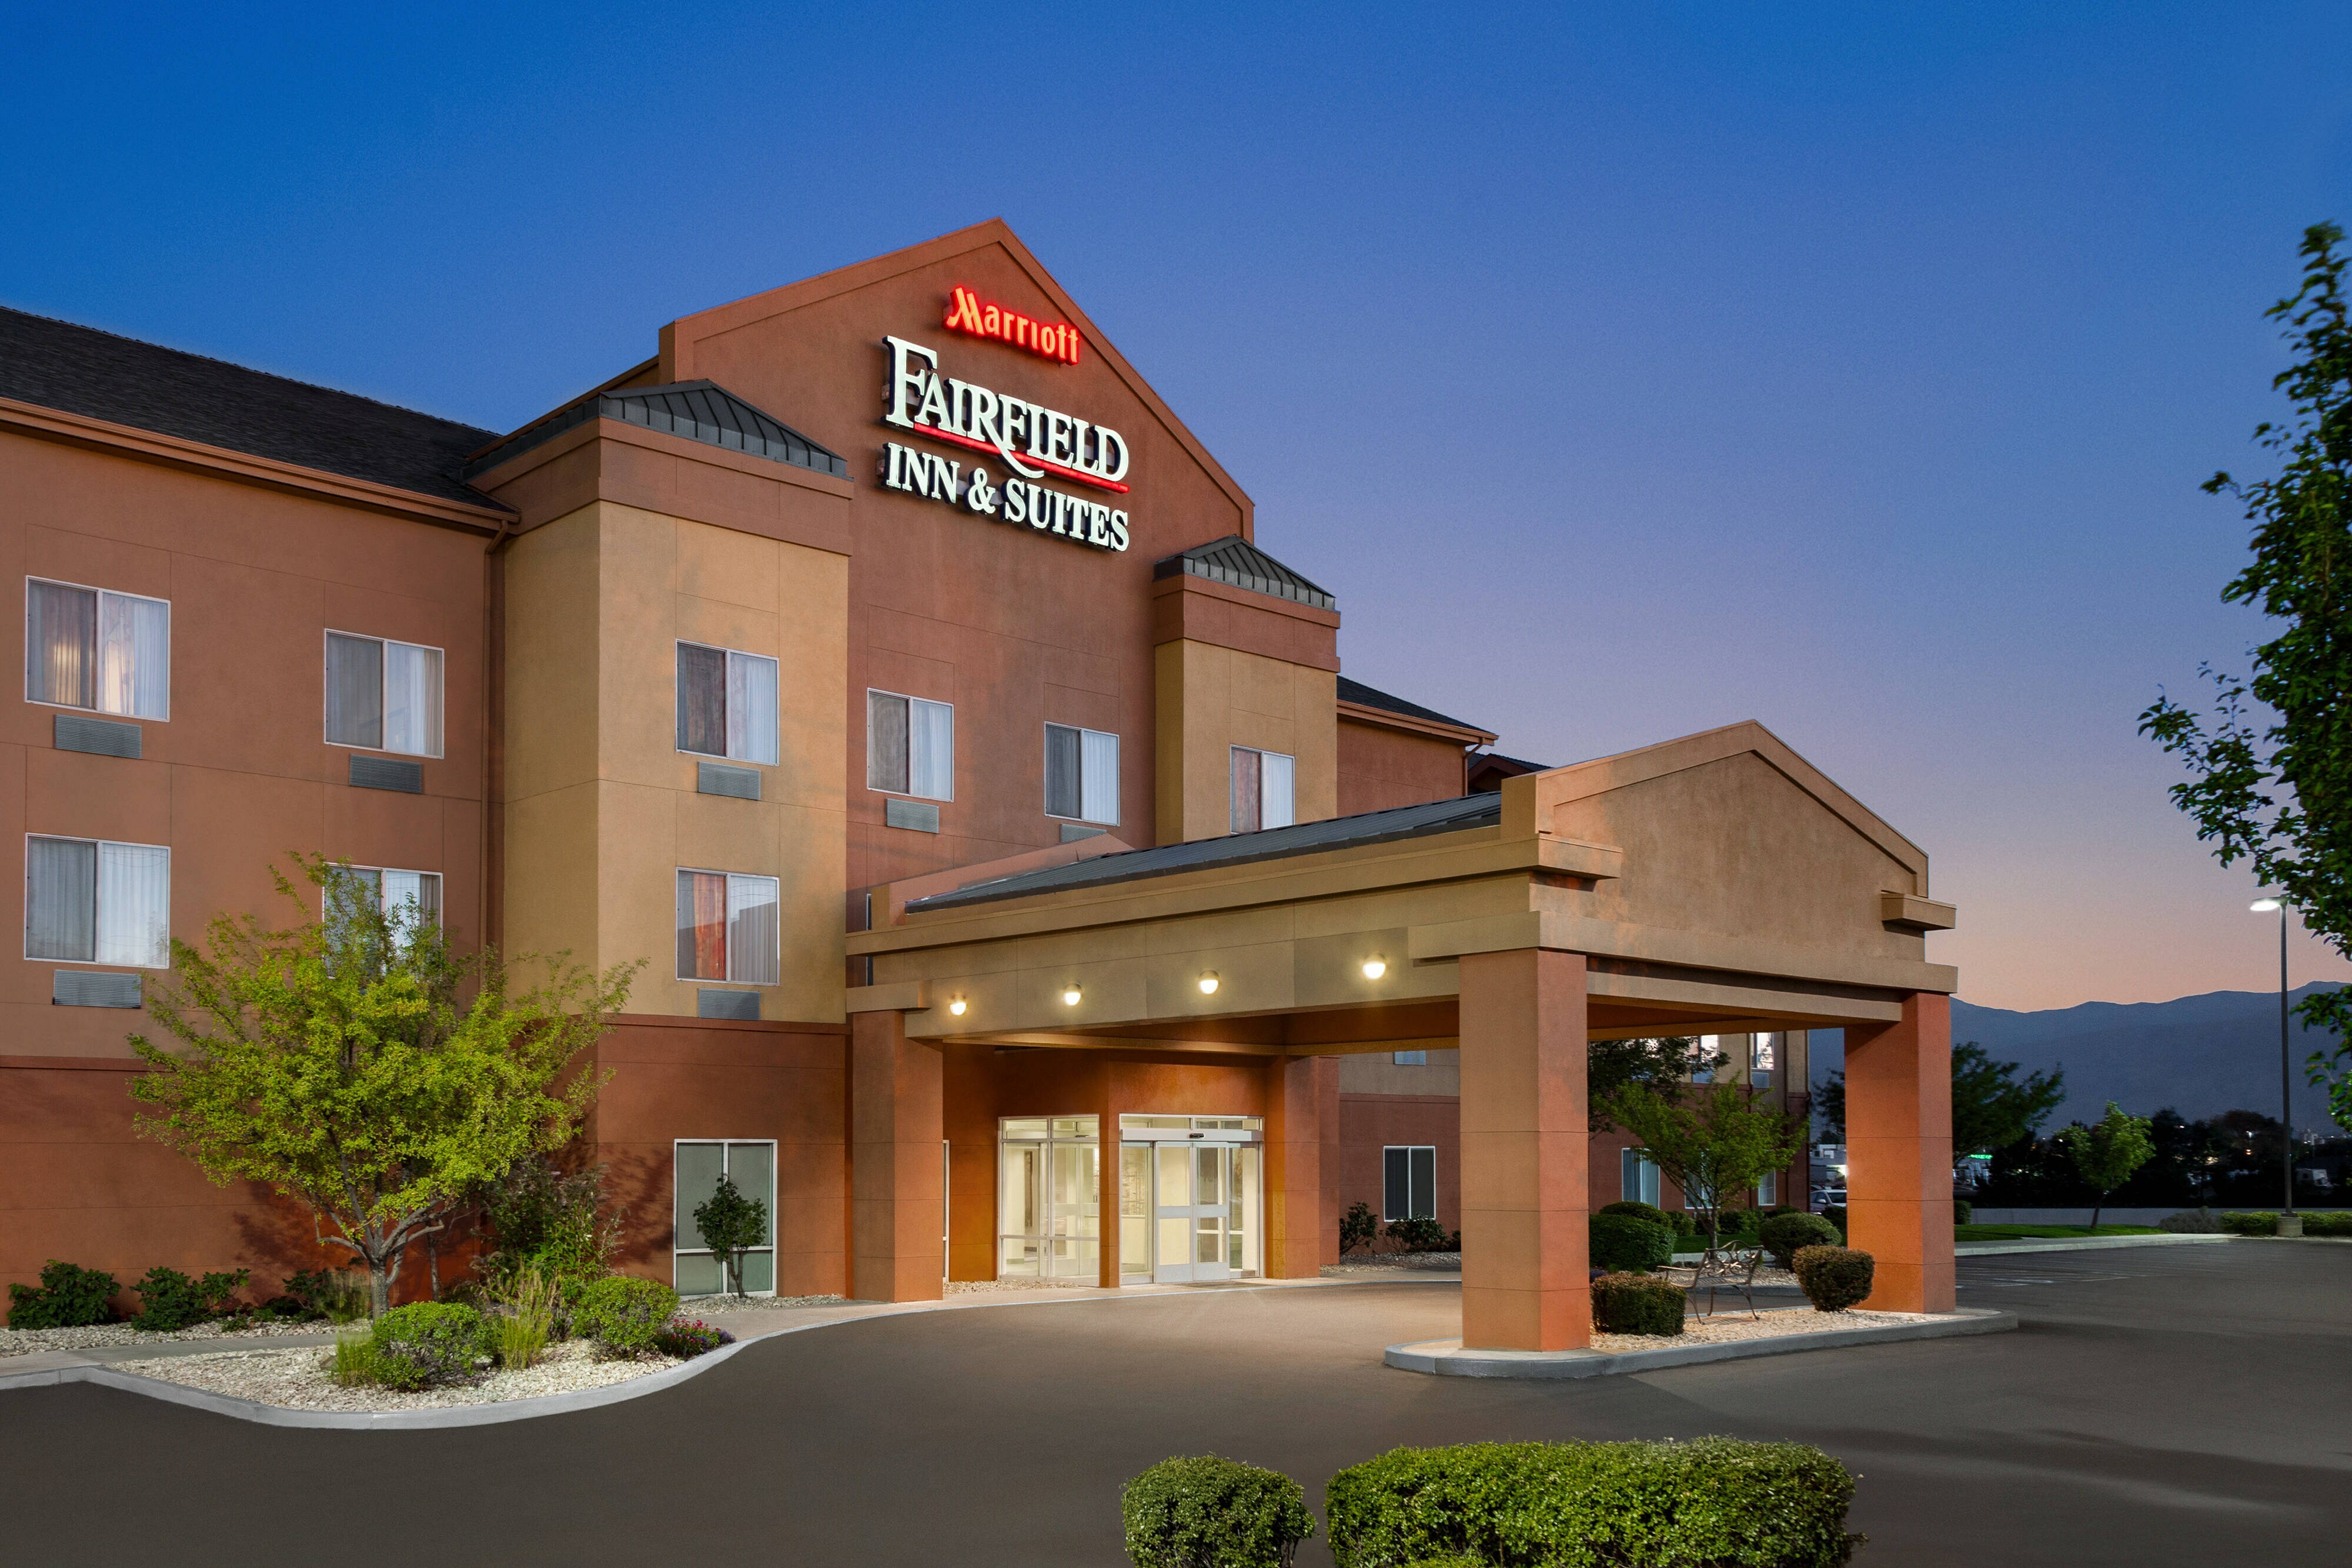 Photo of Fairfield Inn & Suites Reno Sparks, Sparks, NV